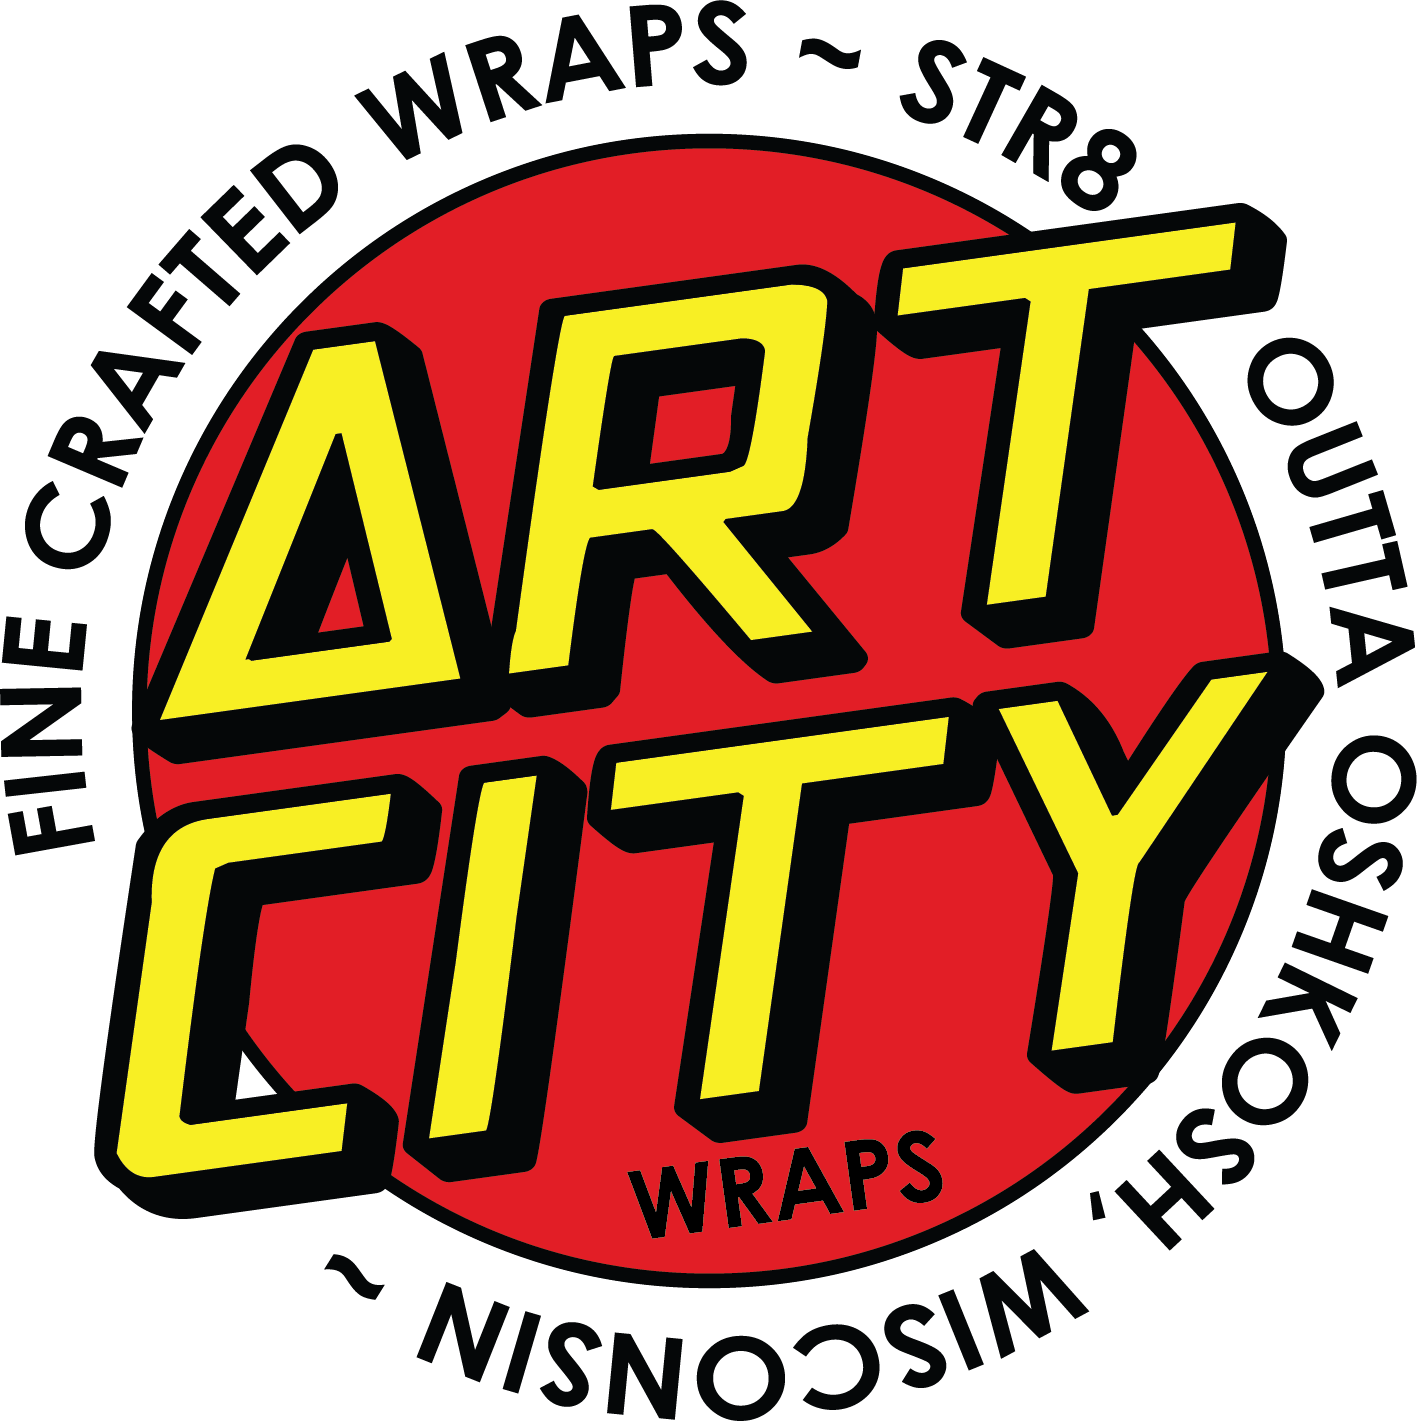 ART CITY WRAPS